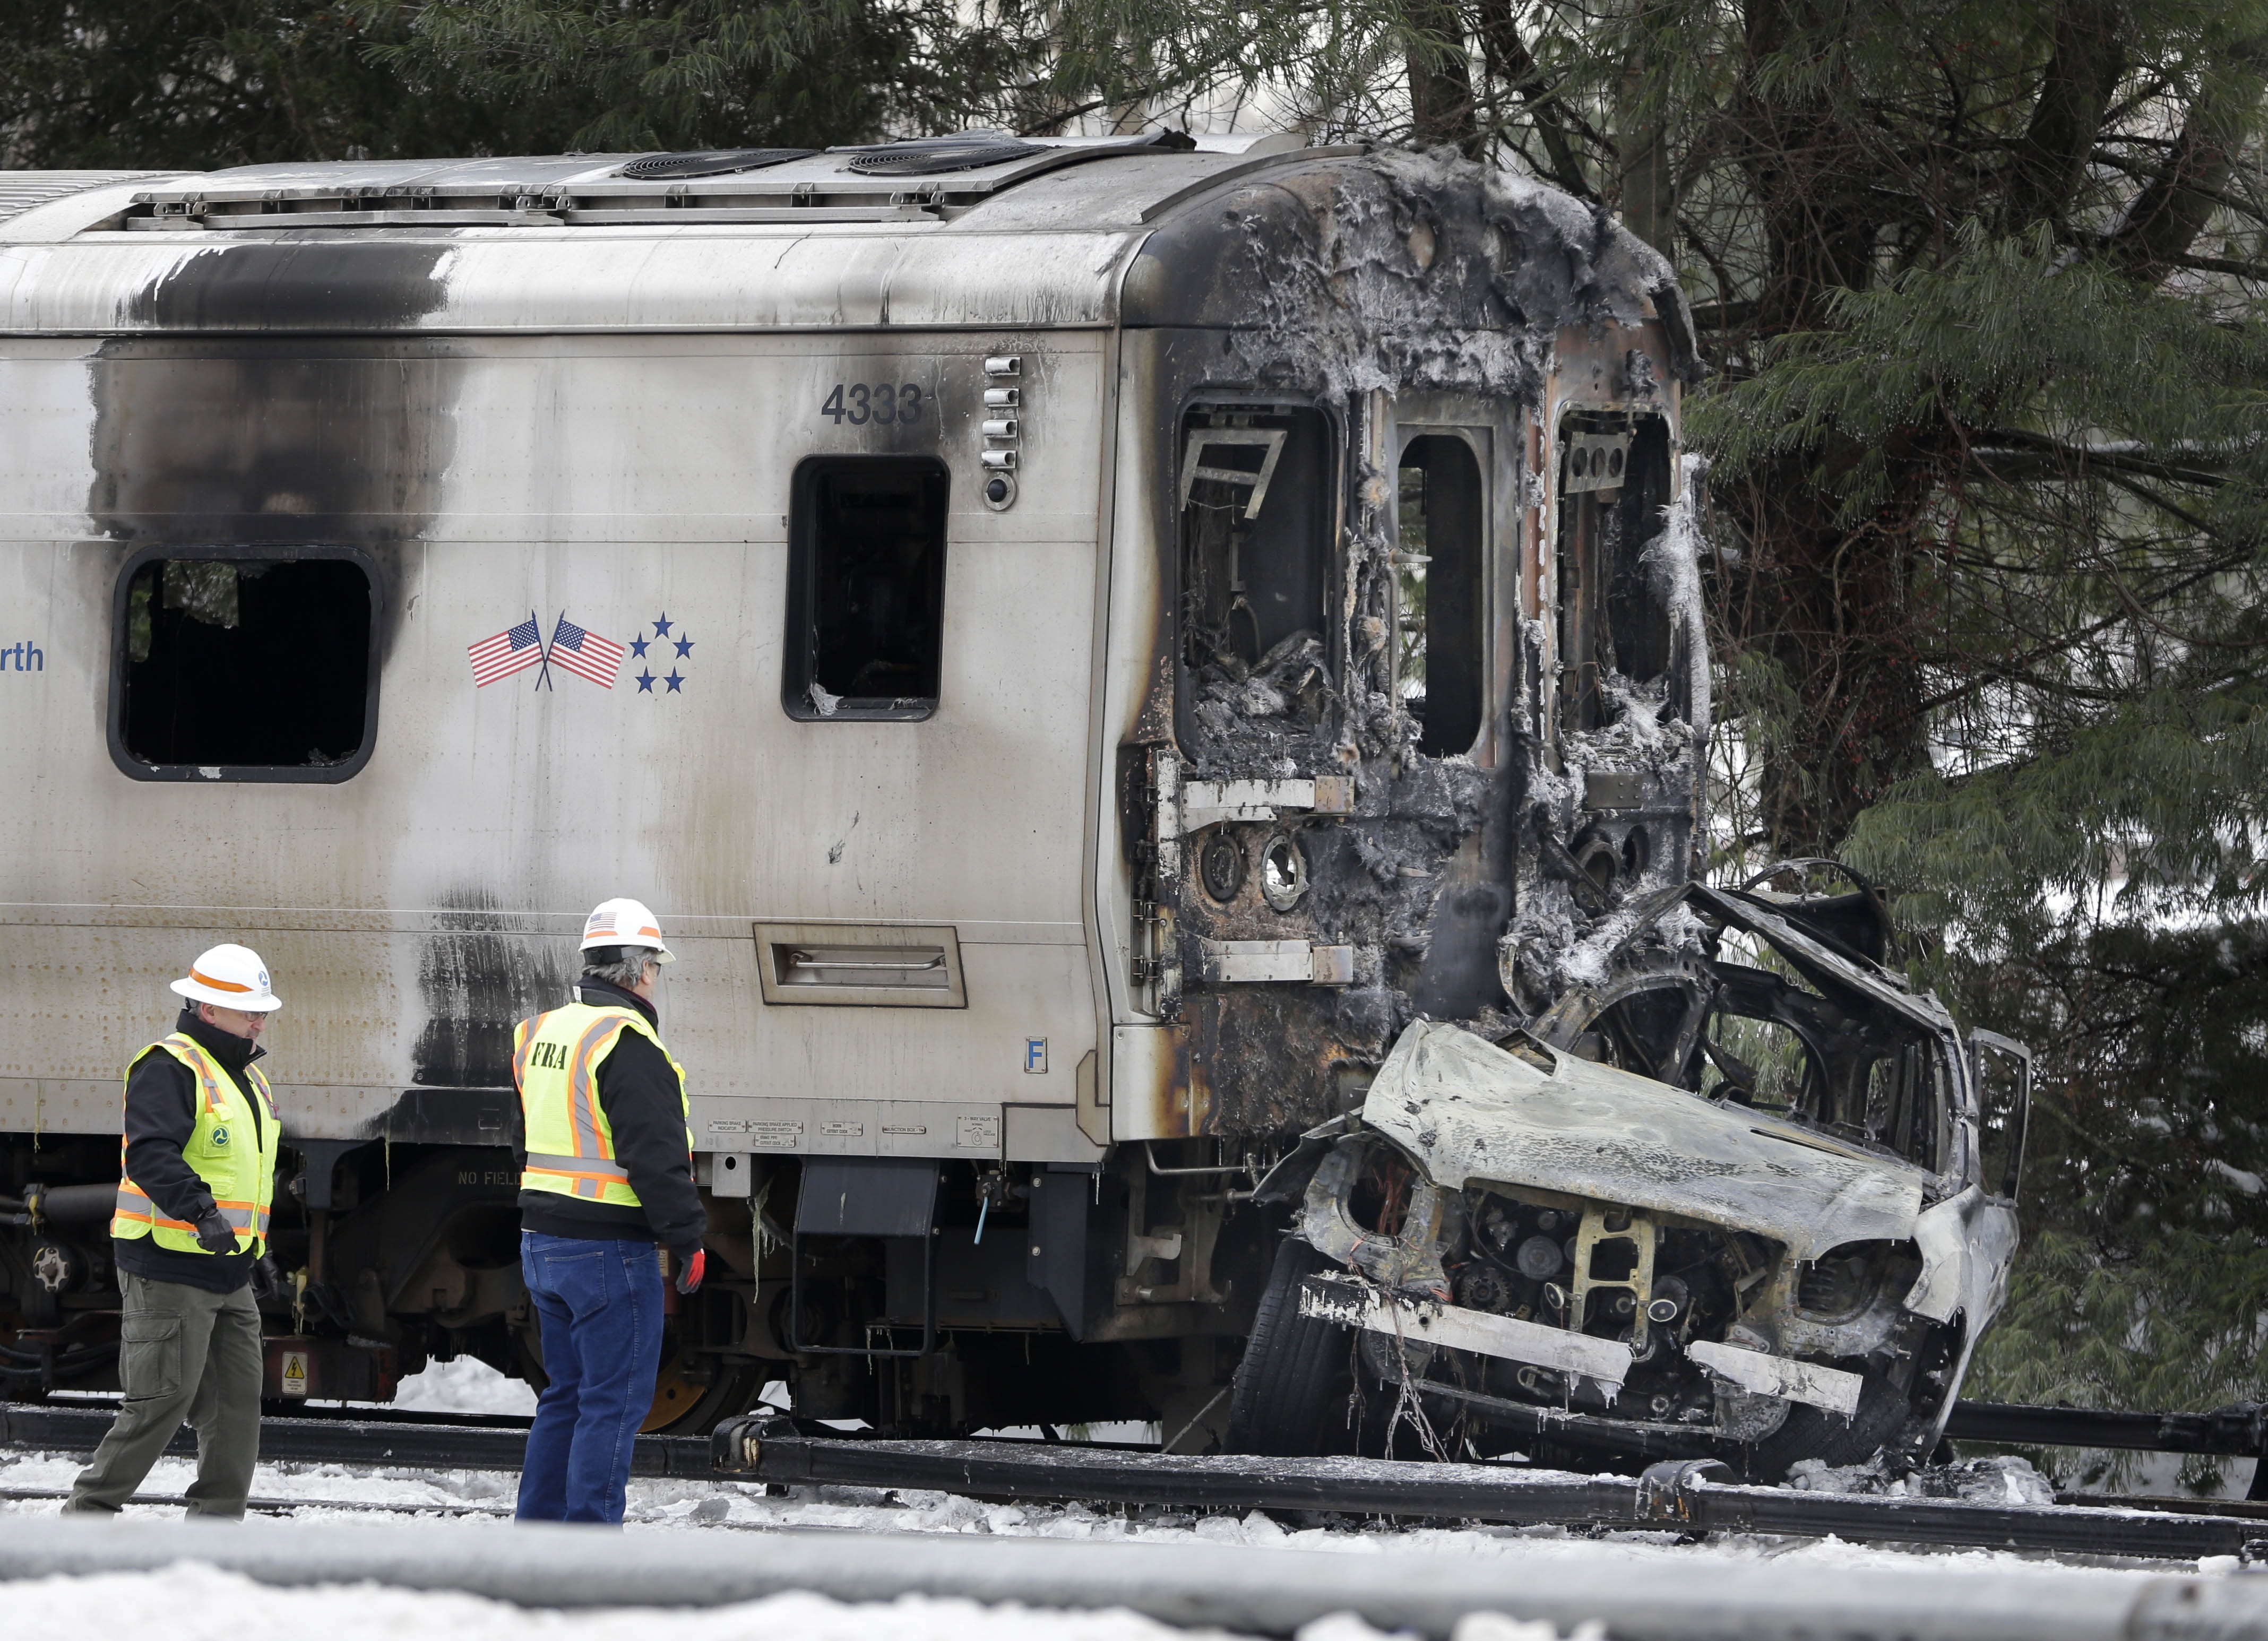 MetroNorth crash NTSB investigating fatal commuter trainSUV crash in